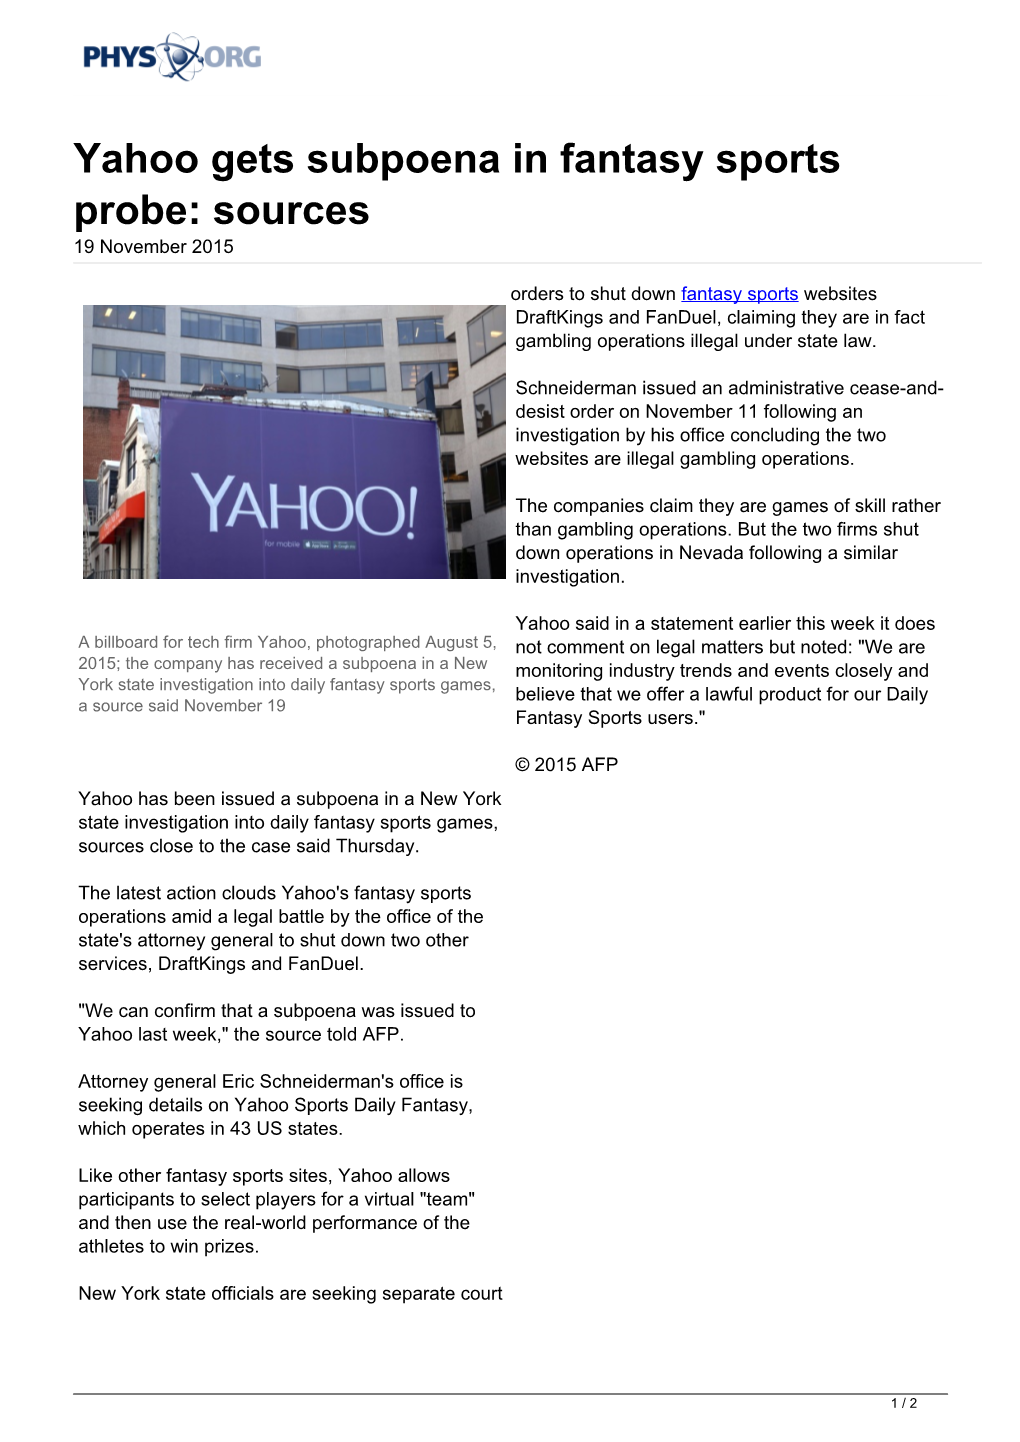 Yahoo Gets Subpoena in Fantasy Sports Probe: Sources 19 November 2015